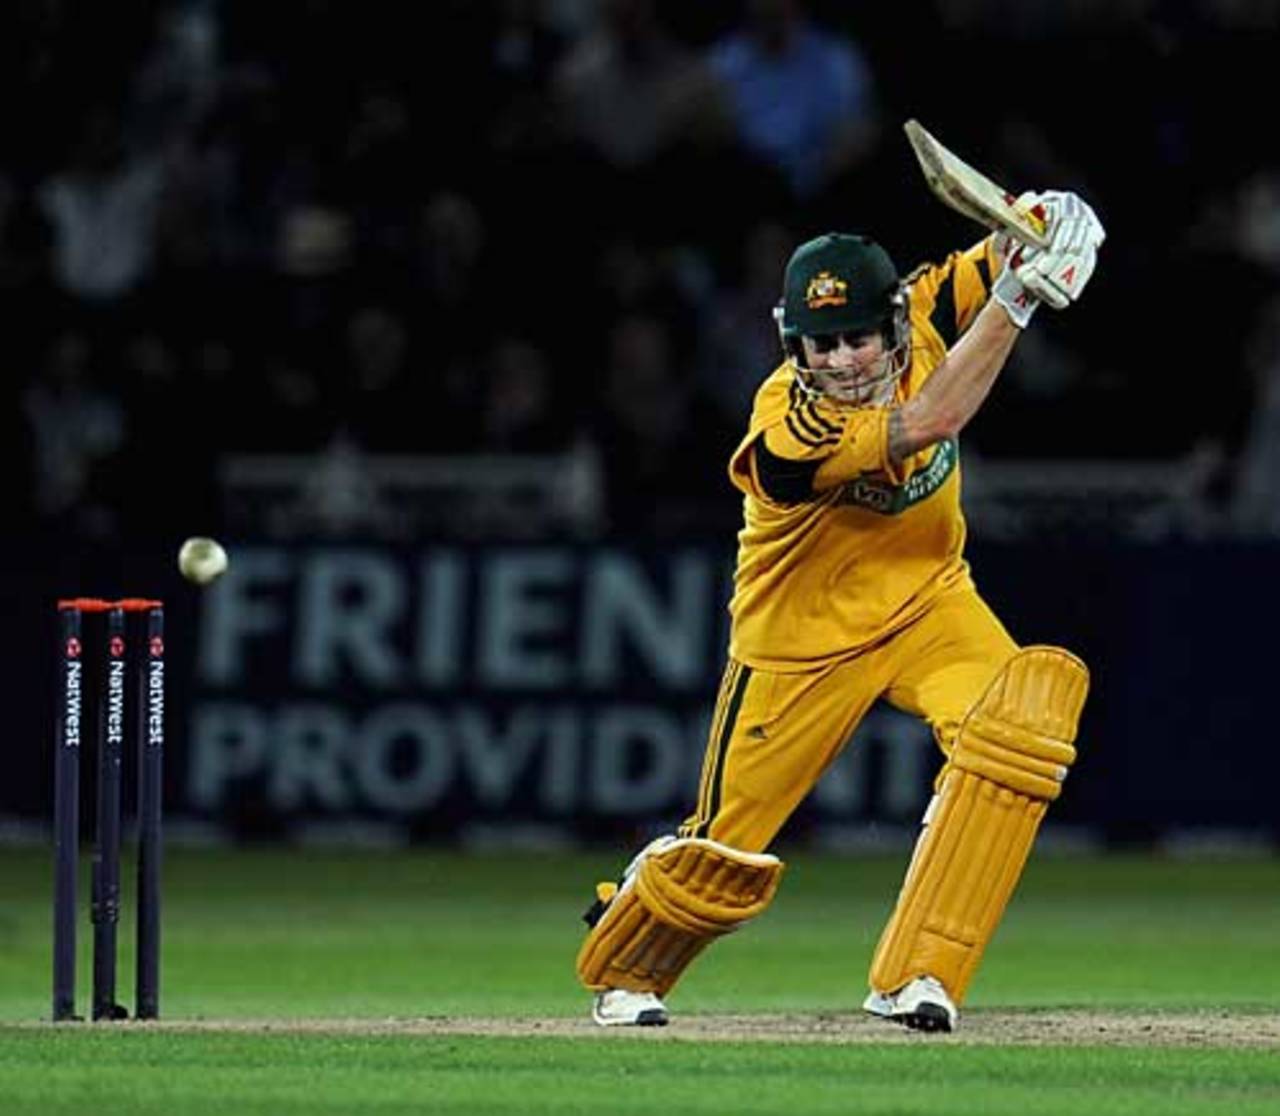 Michael Clarke showed some good touch during his half century, England v Australia, 5th ODI, Trent Bridge, September 15, 2009